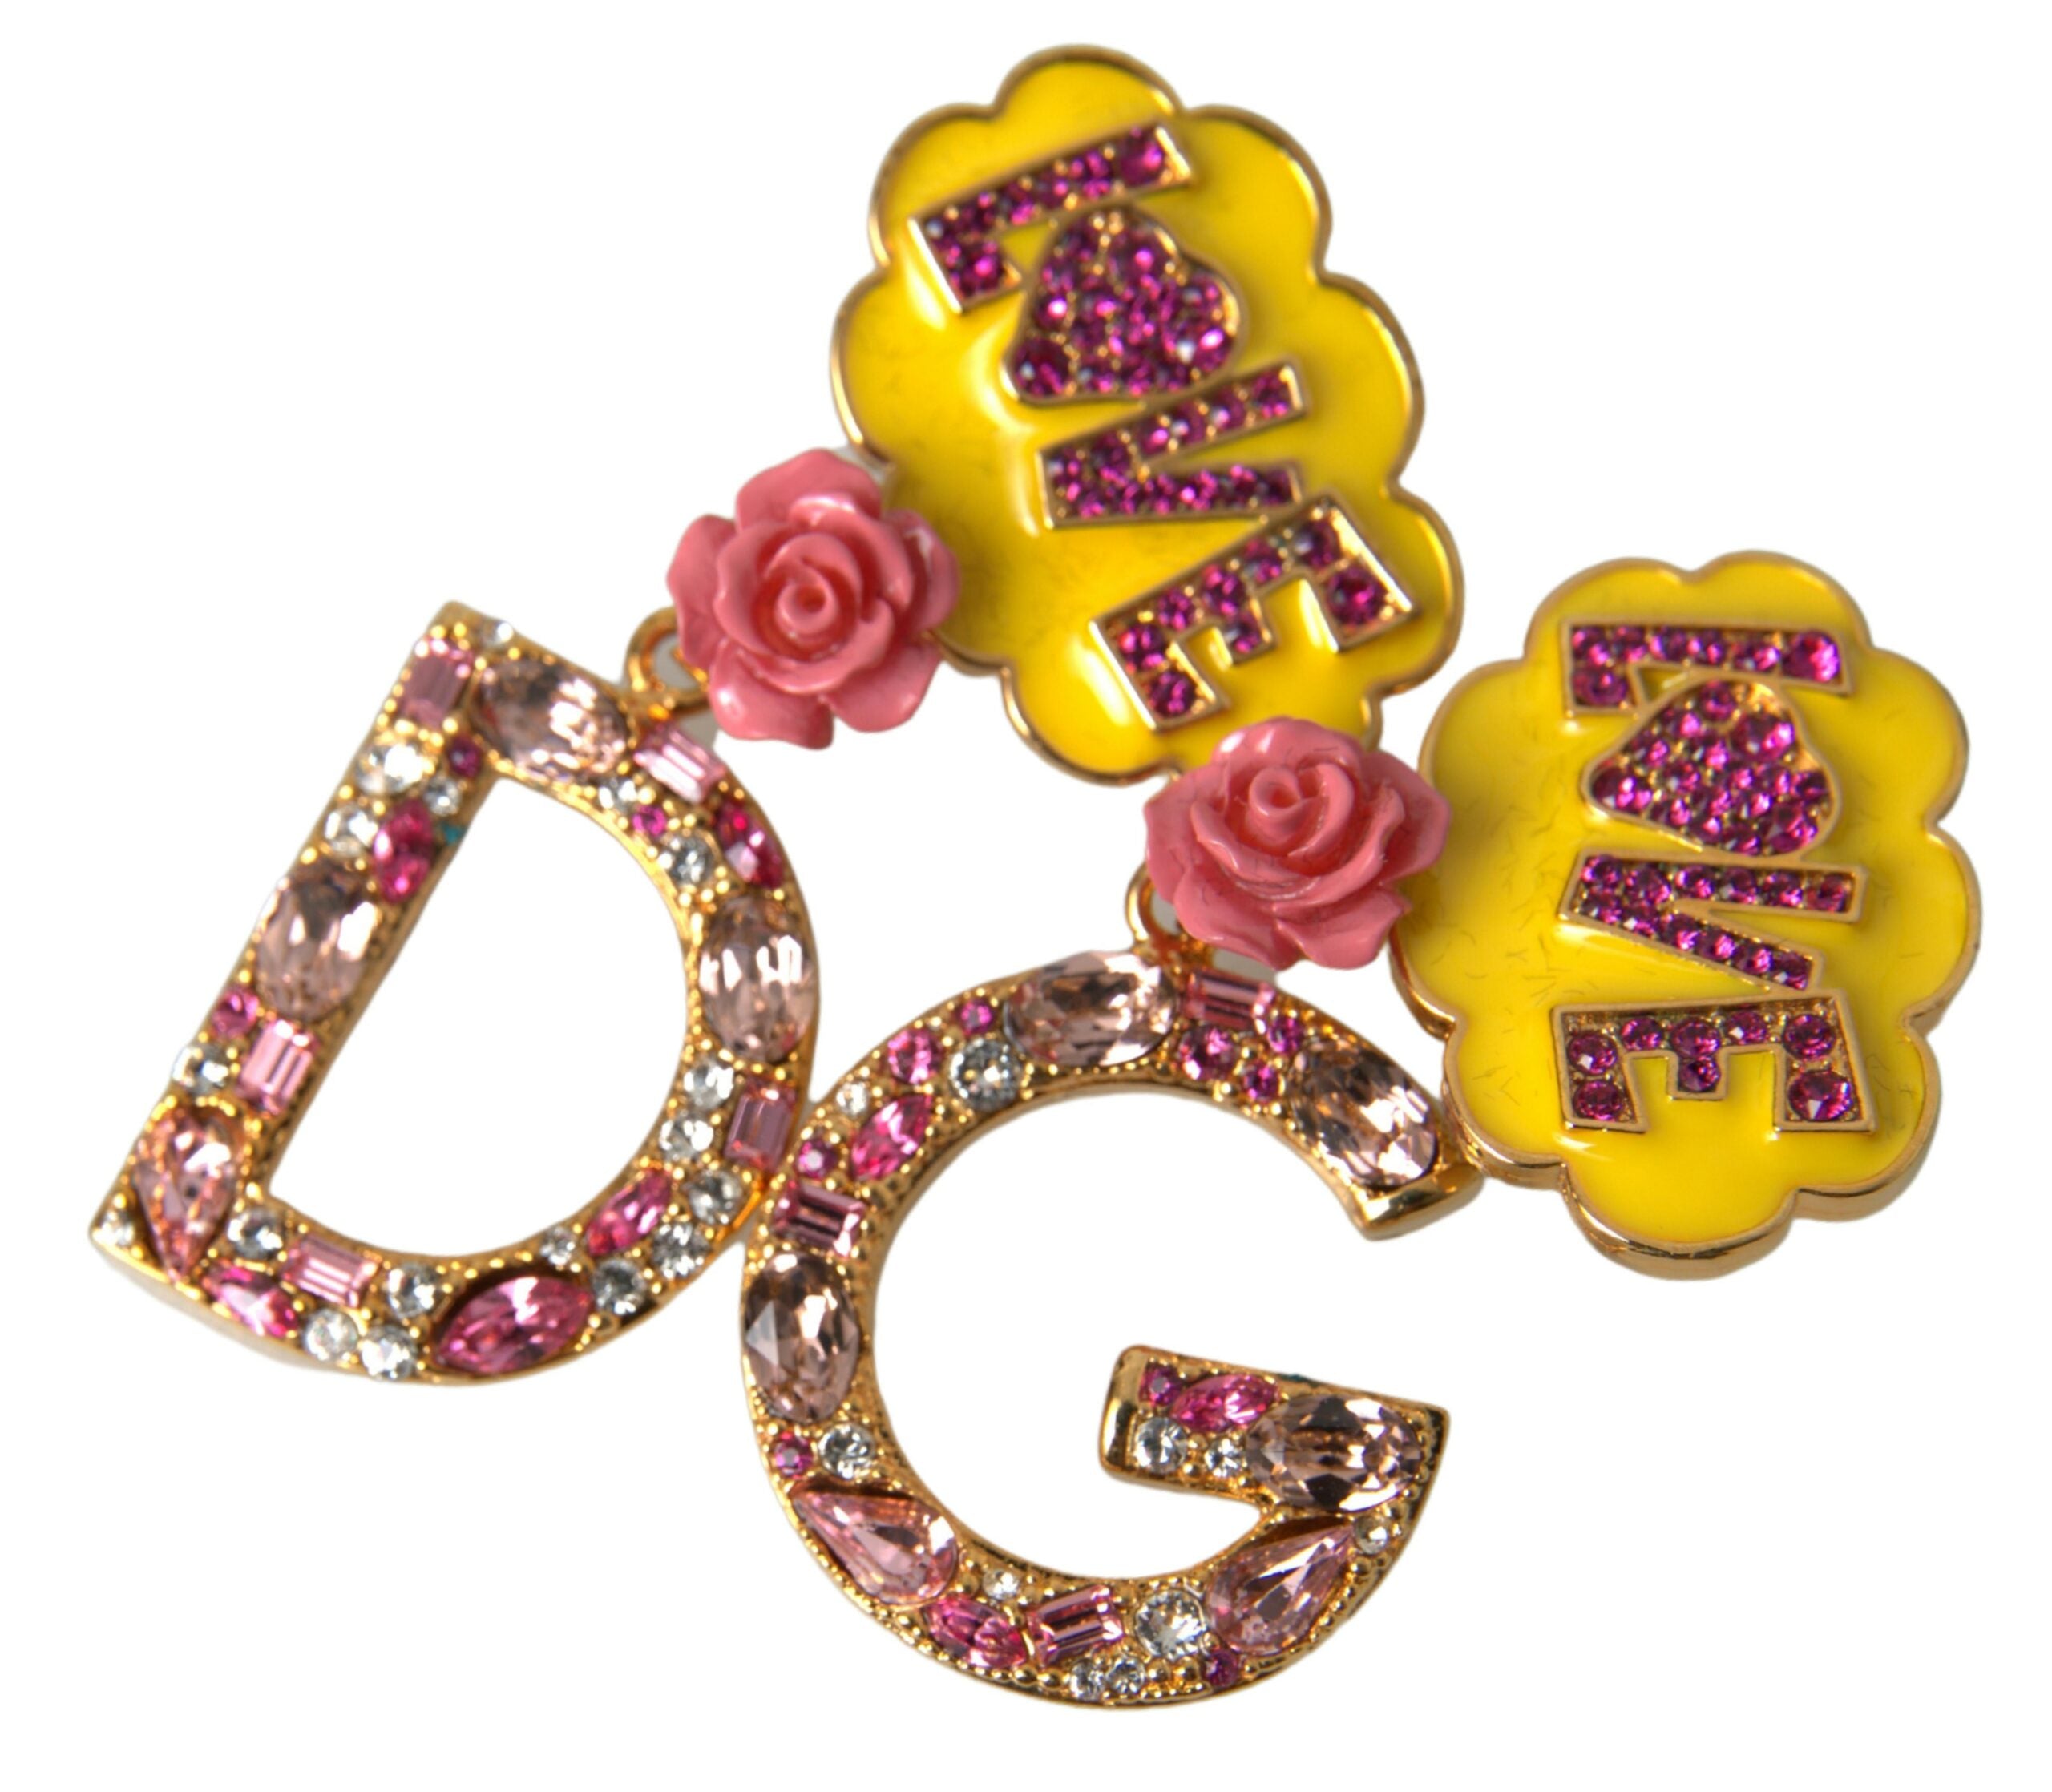 Dolce & Gabbana Glimmering Gold Crystal Dangle Earrings